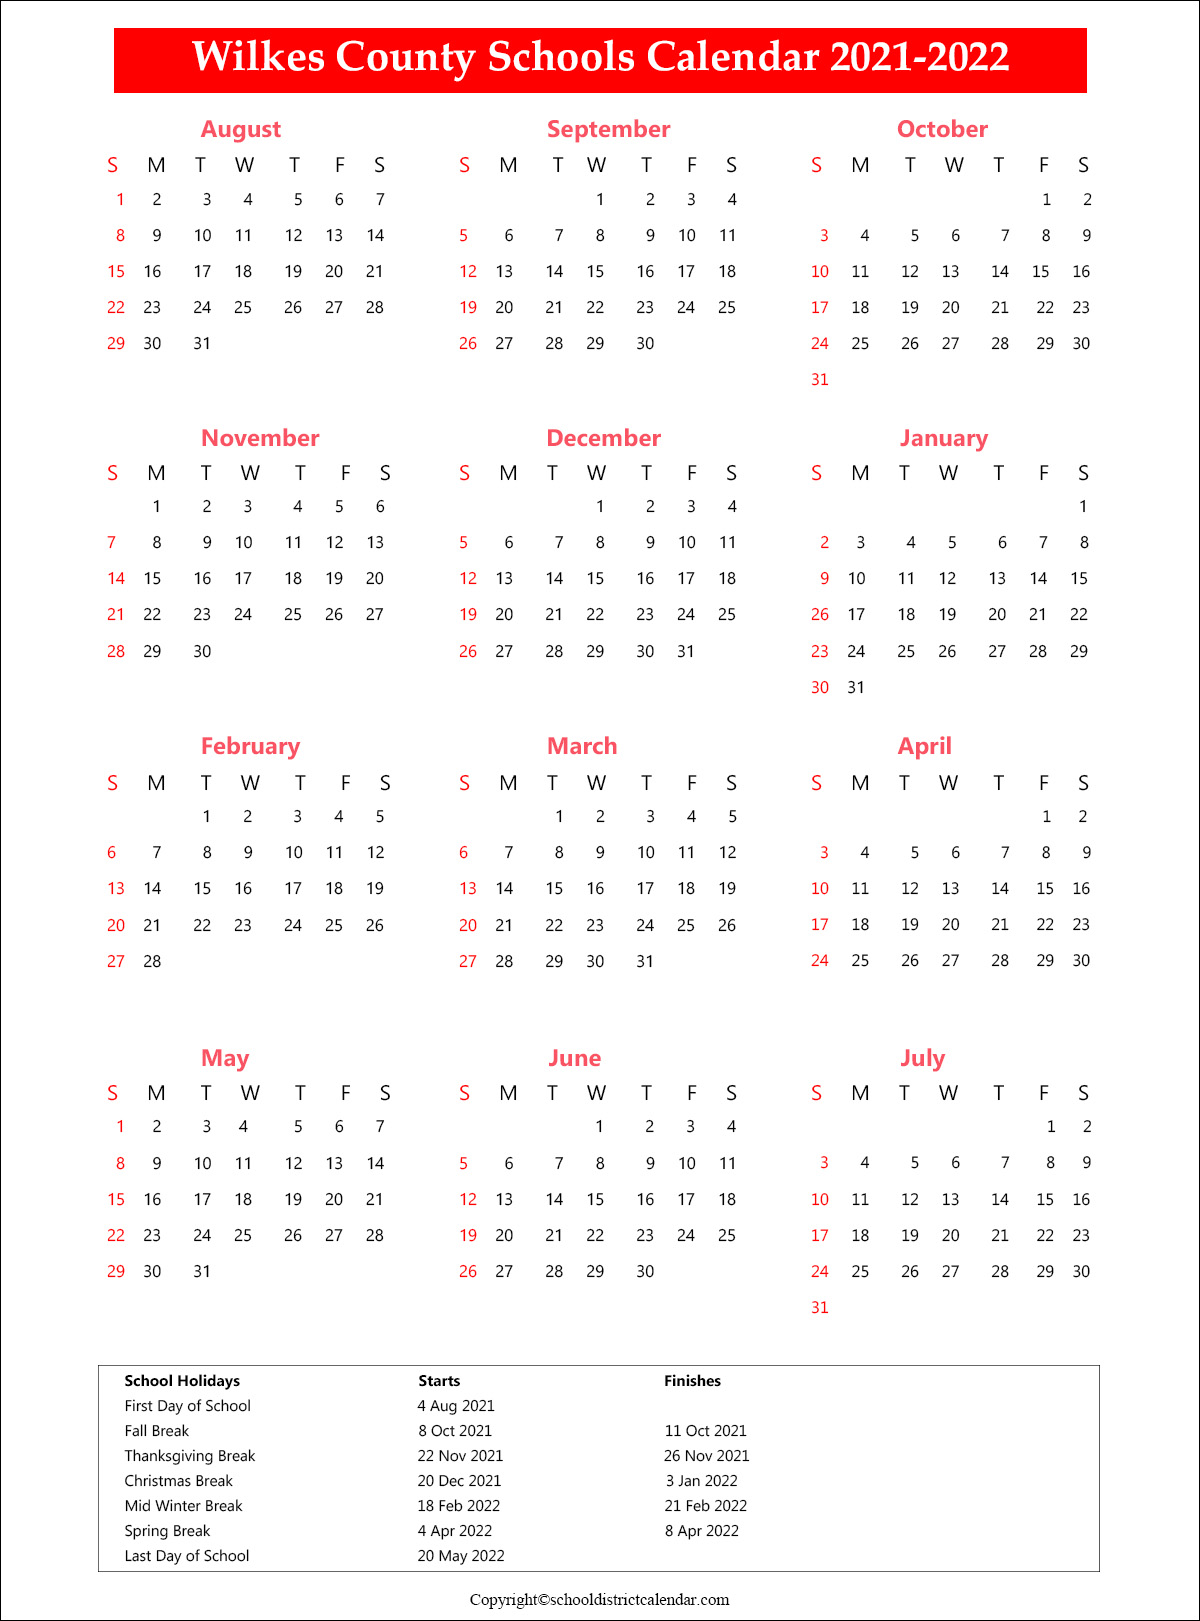 Wilkes County Schools Calendar 2021